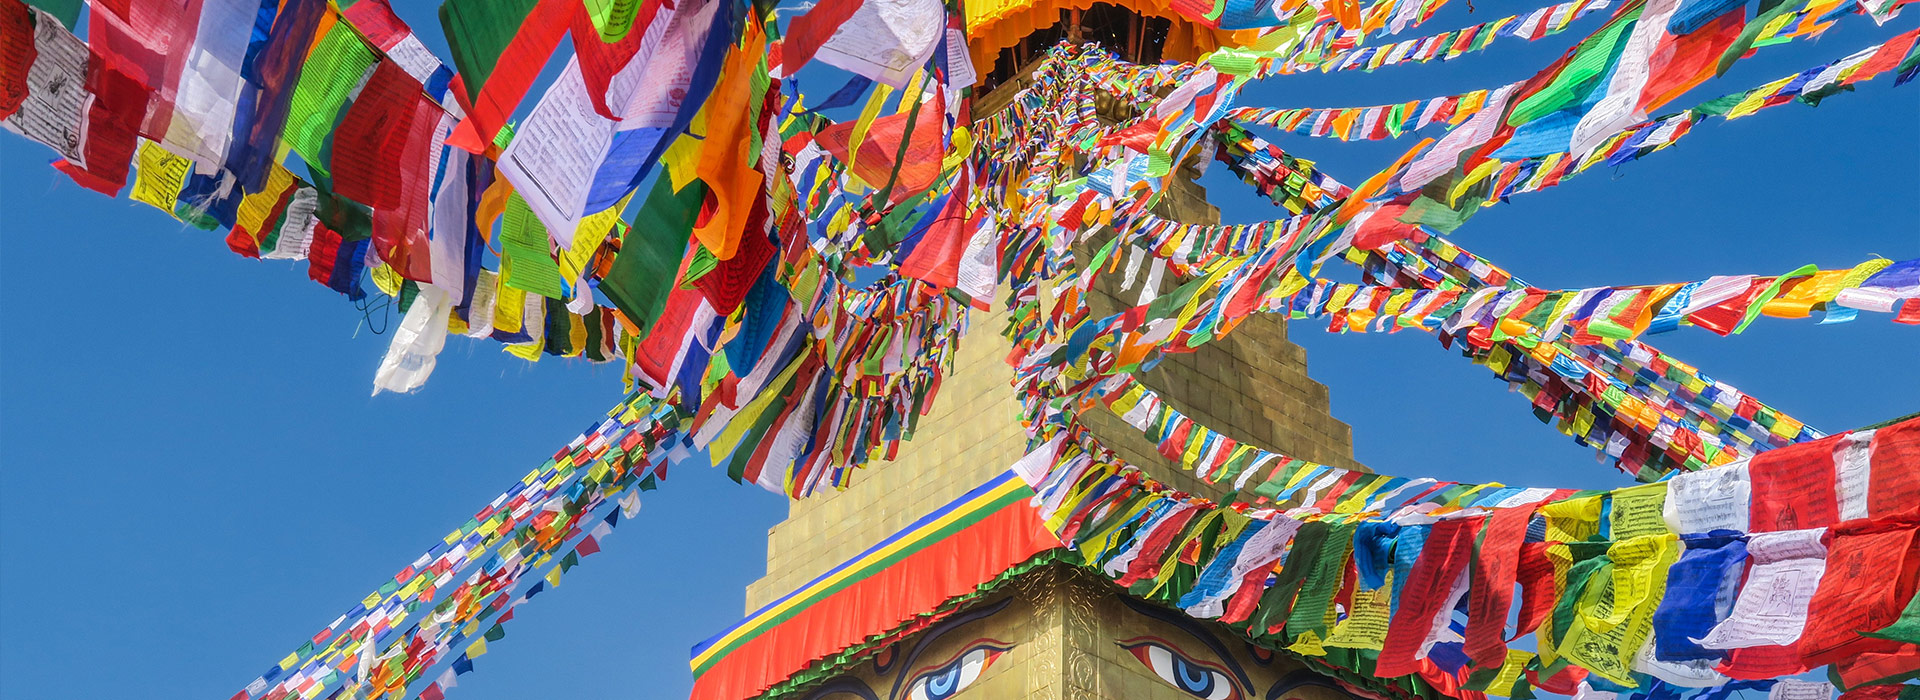 Reisen nach Nepal - Individuelle Reisen nach Nepal - Harry Kolb AG - Tourismus